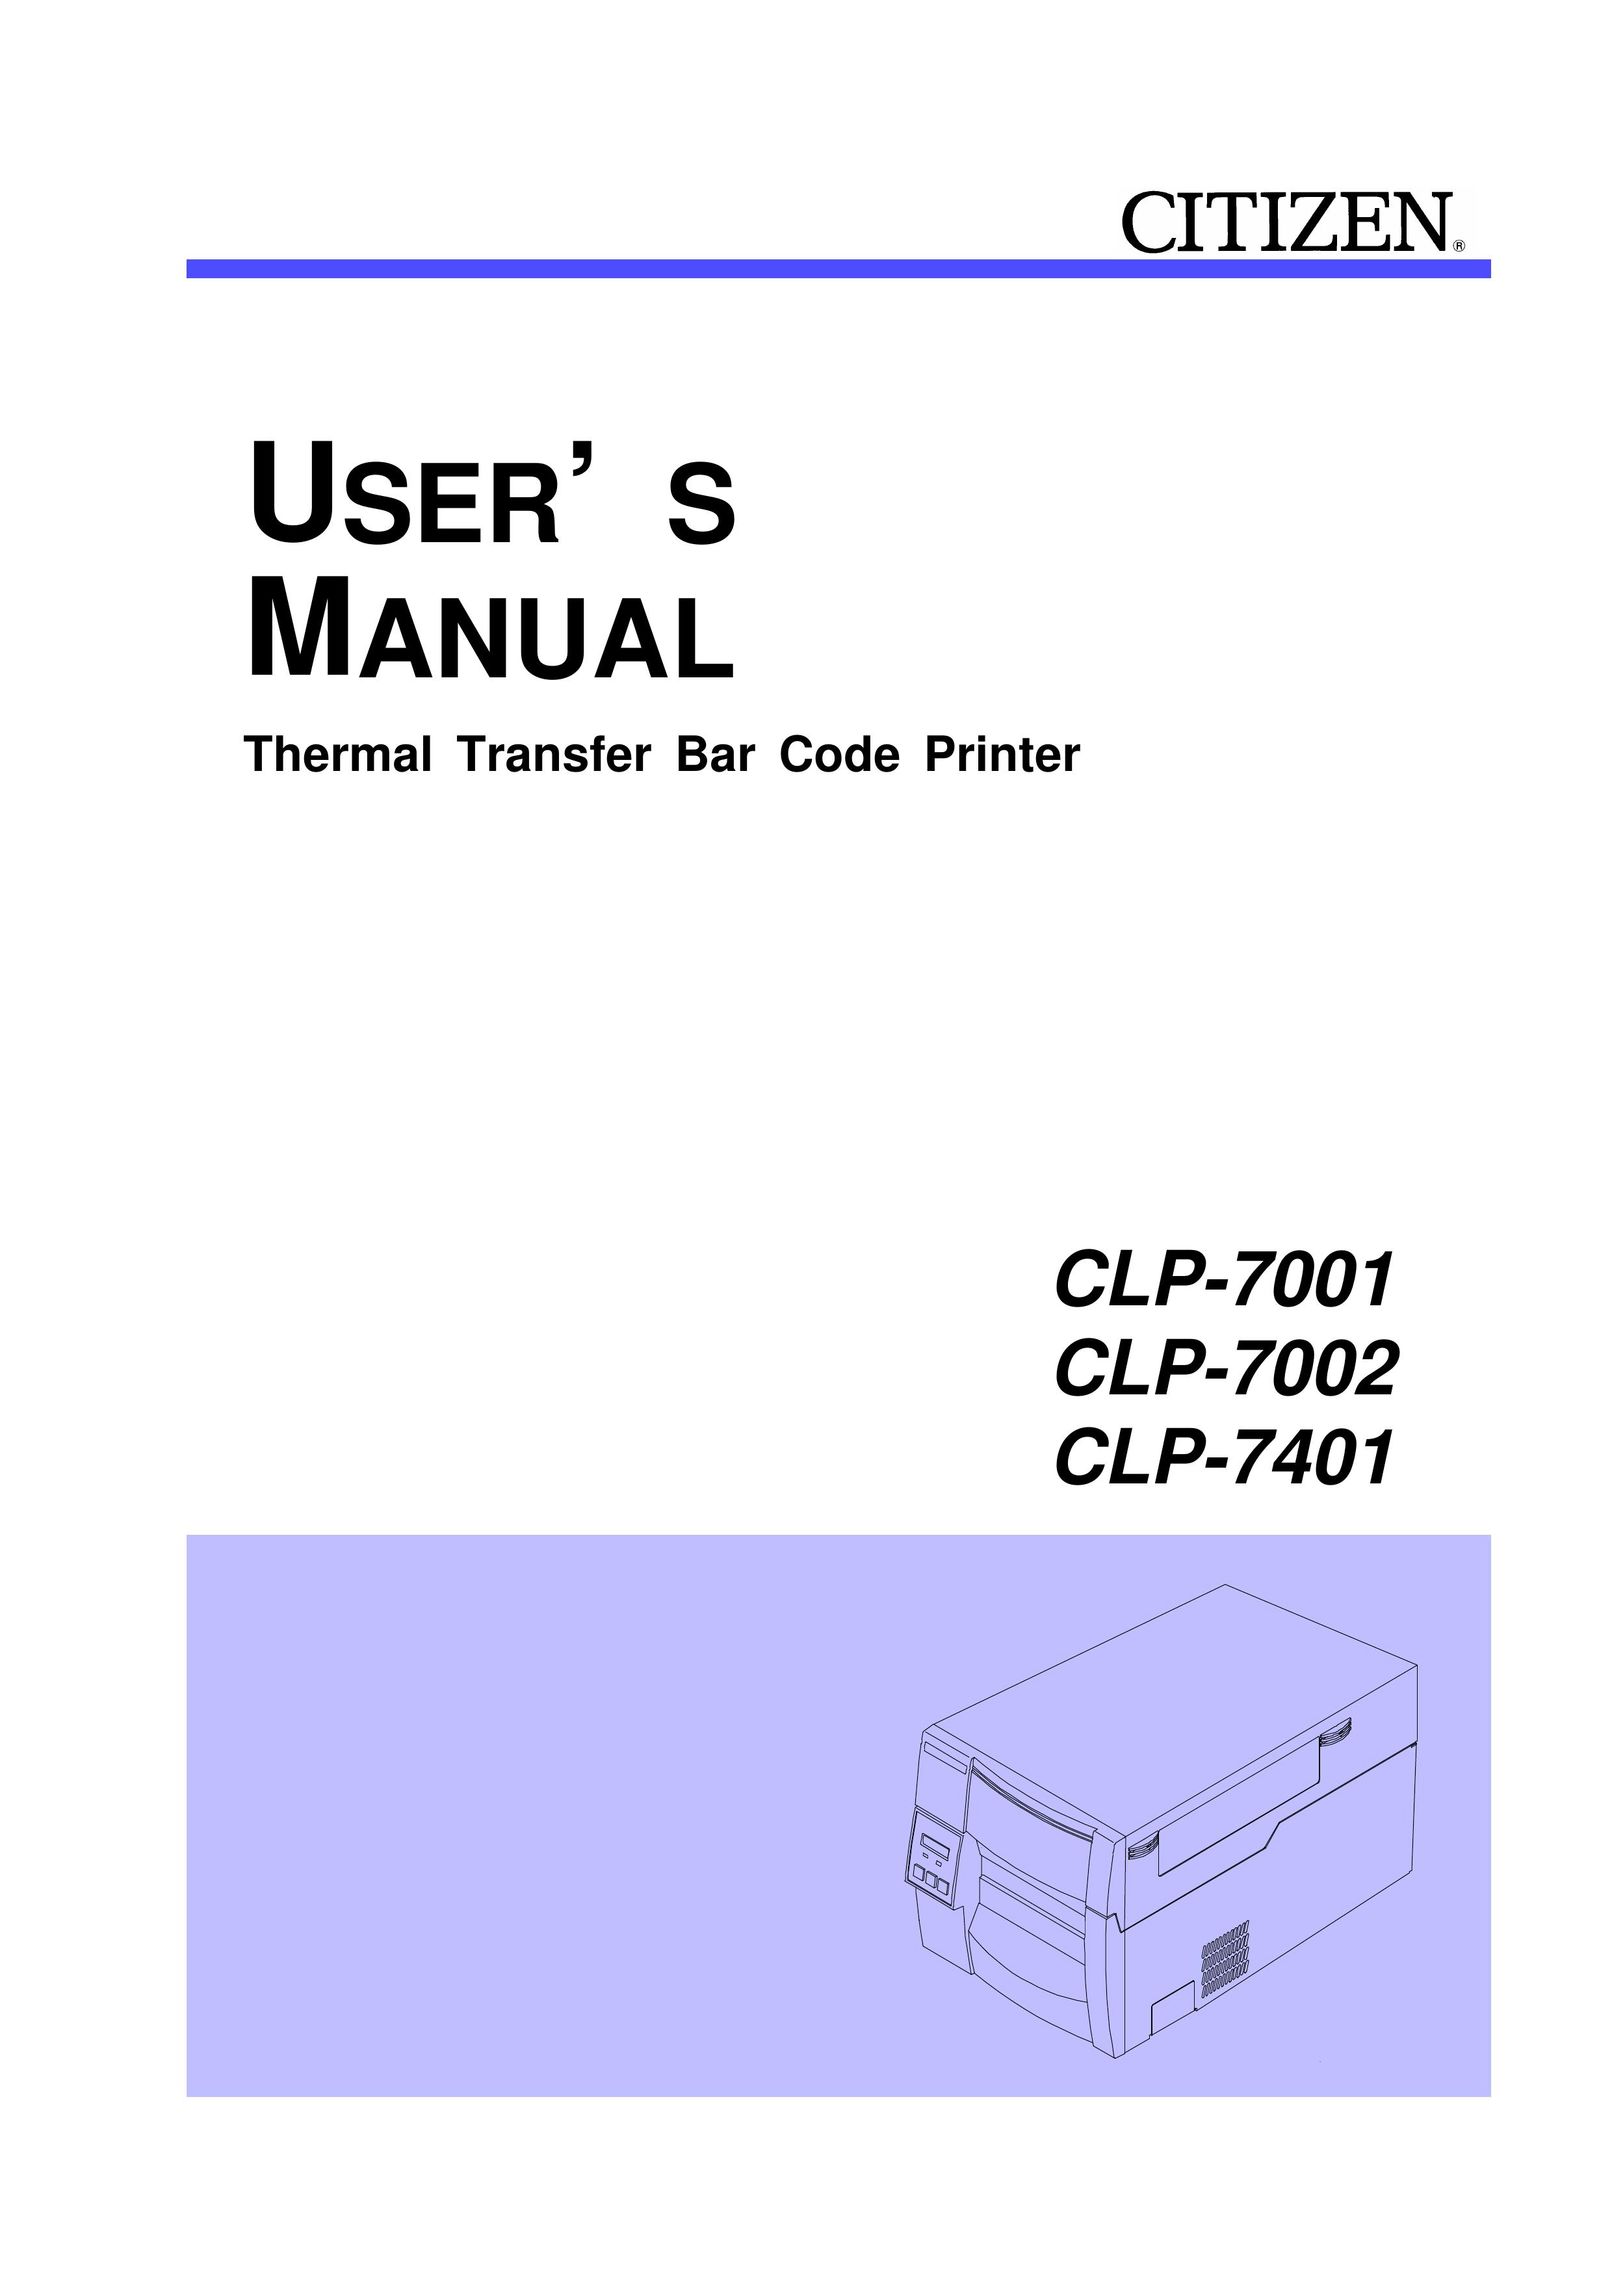 Citizen Systems CLP-7001 Printer User Manual